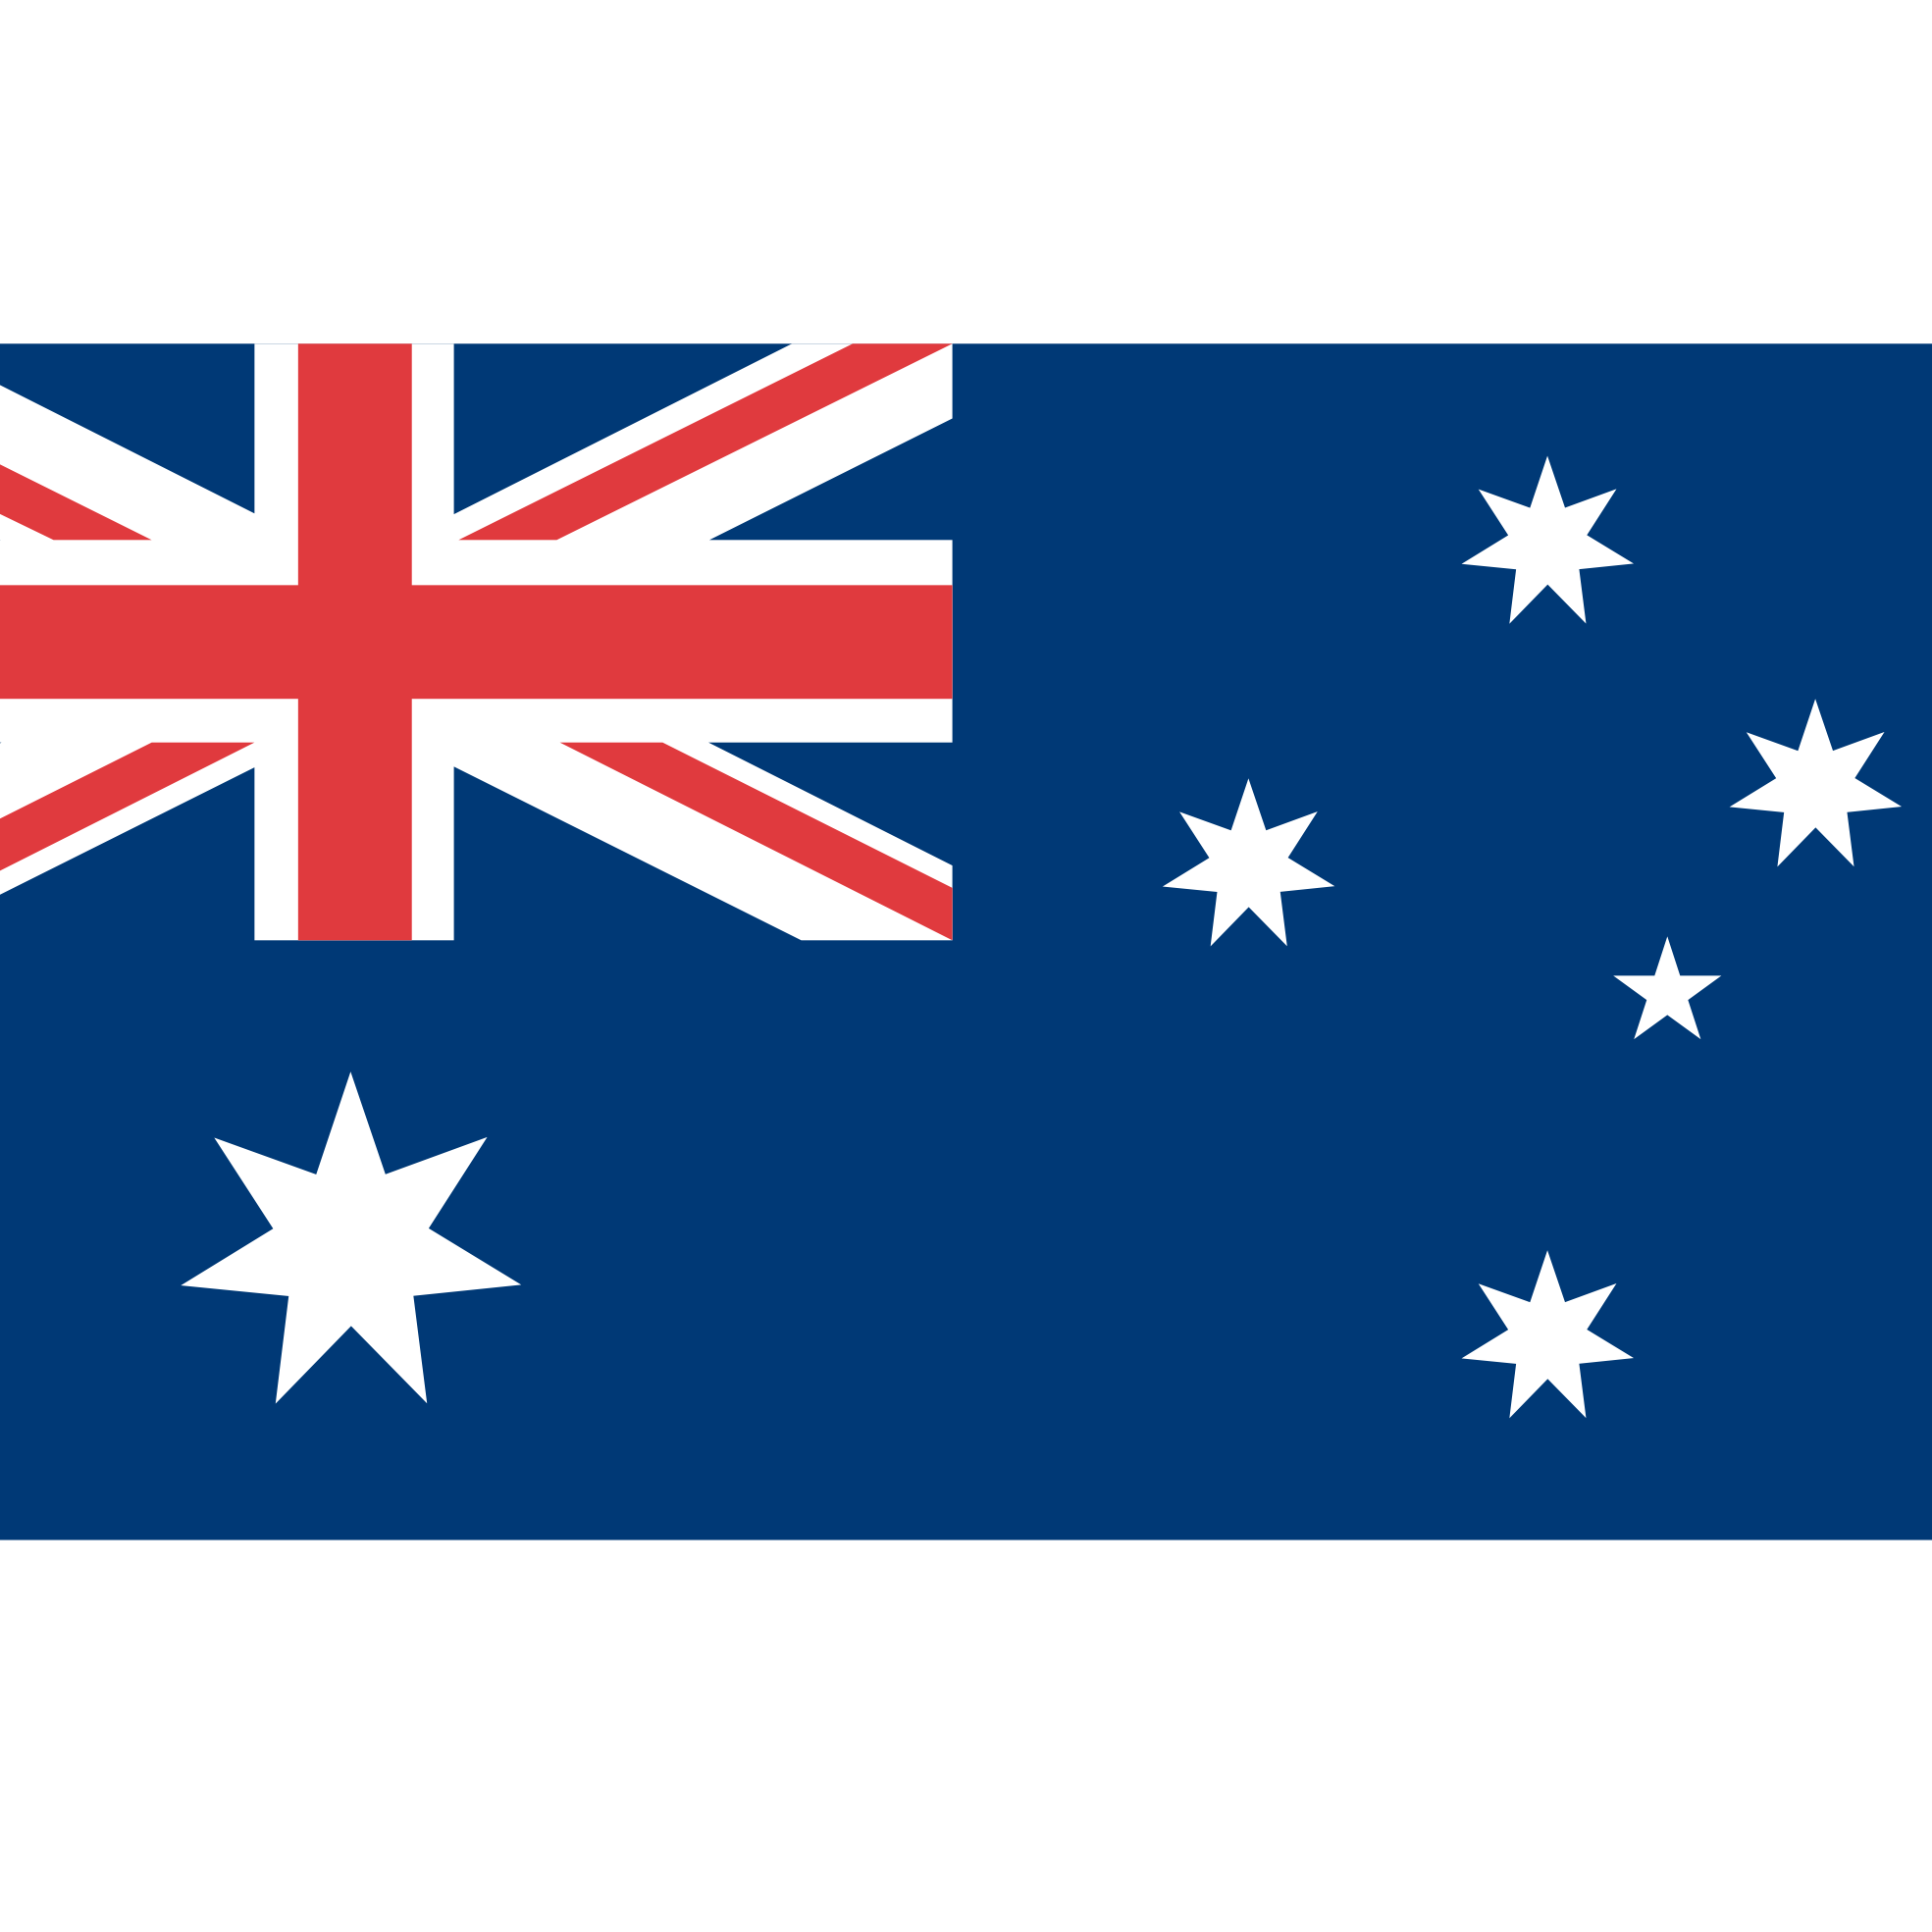 Australian Flag Clipart - ClipArt Best